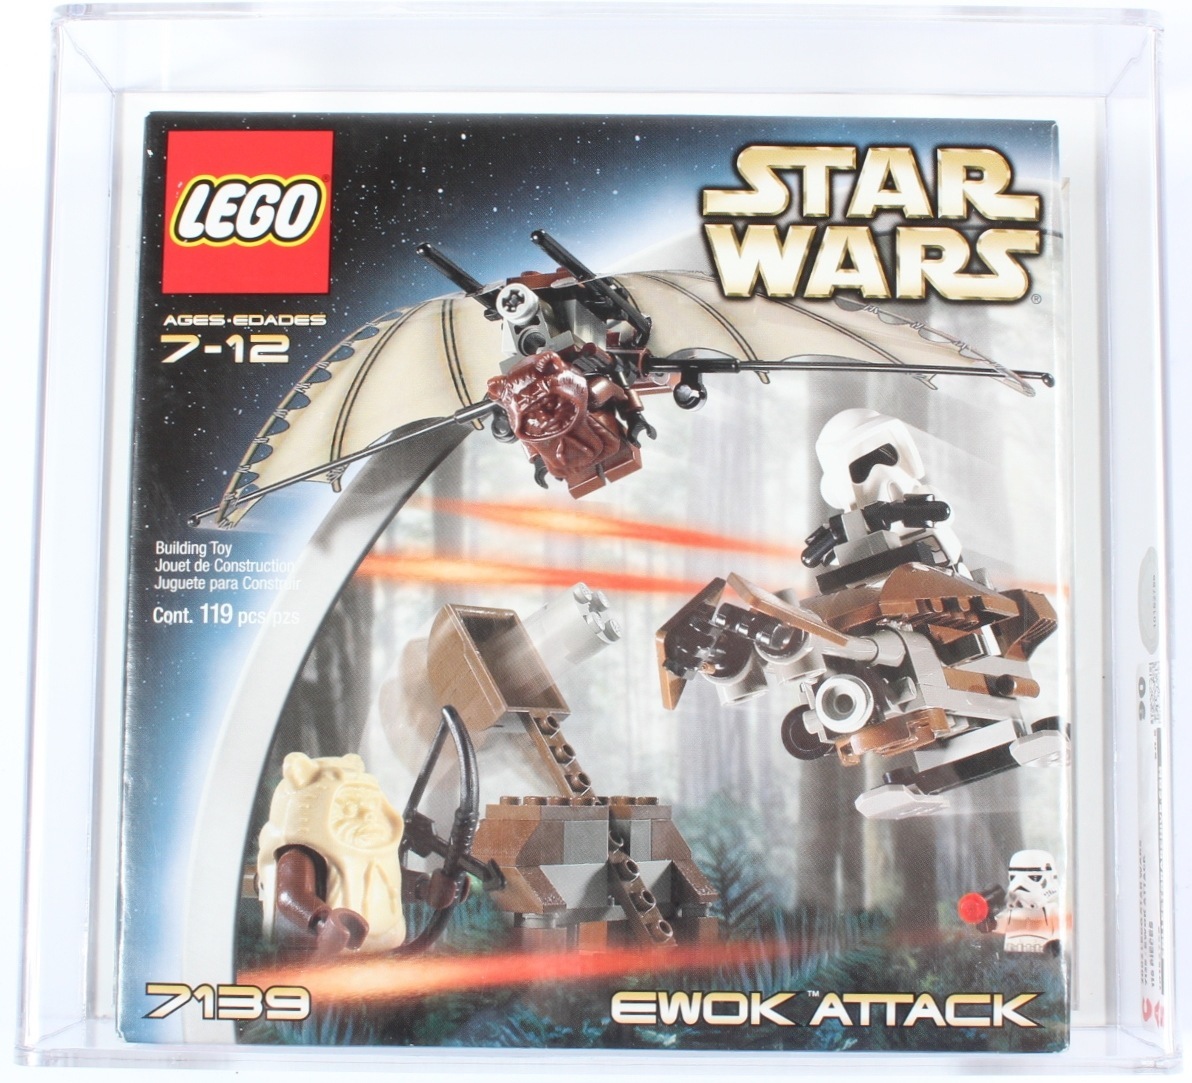 2002 LEGO Star Wars Boxed Kit - Ewok Attack